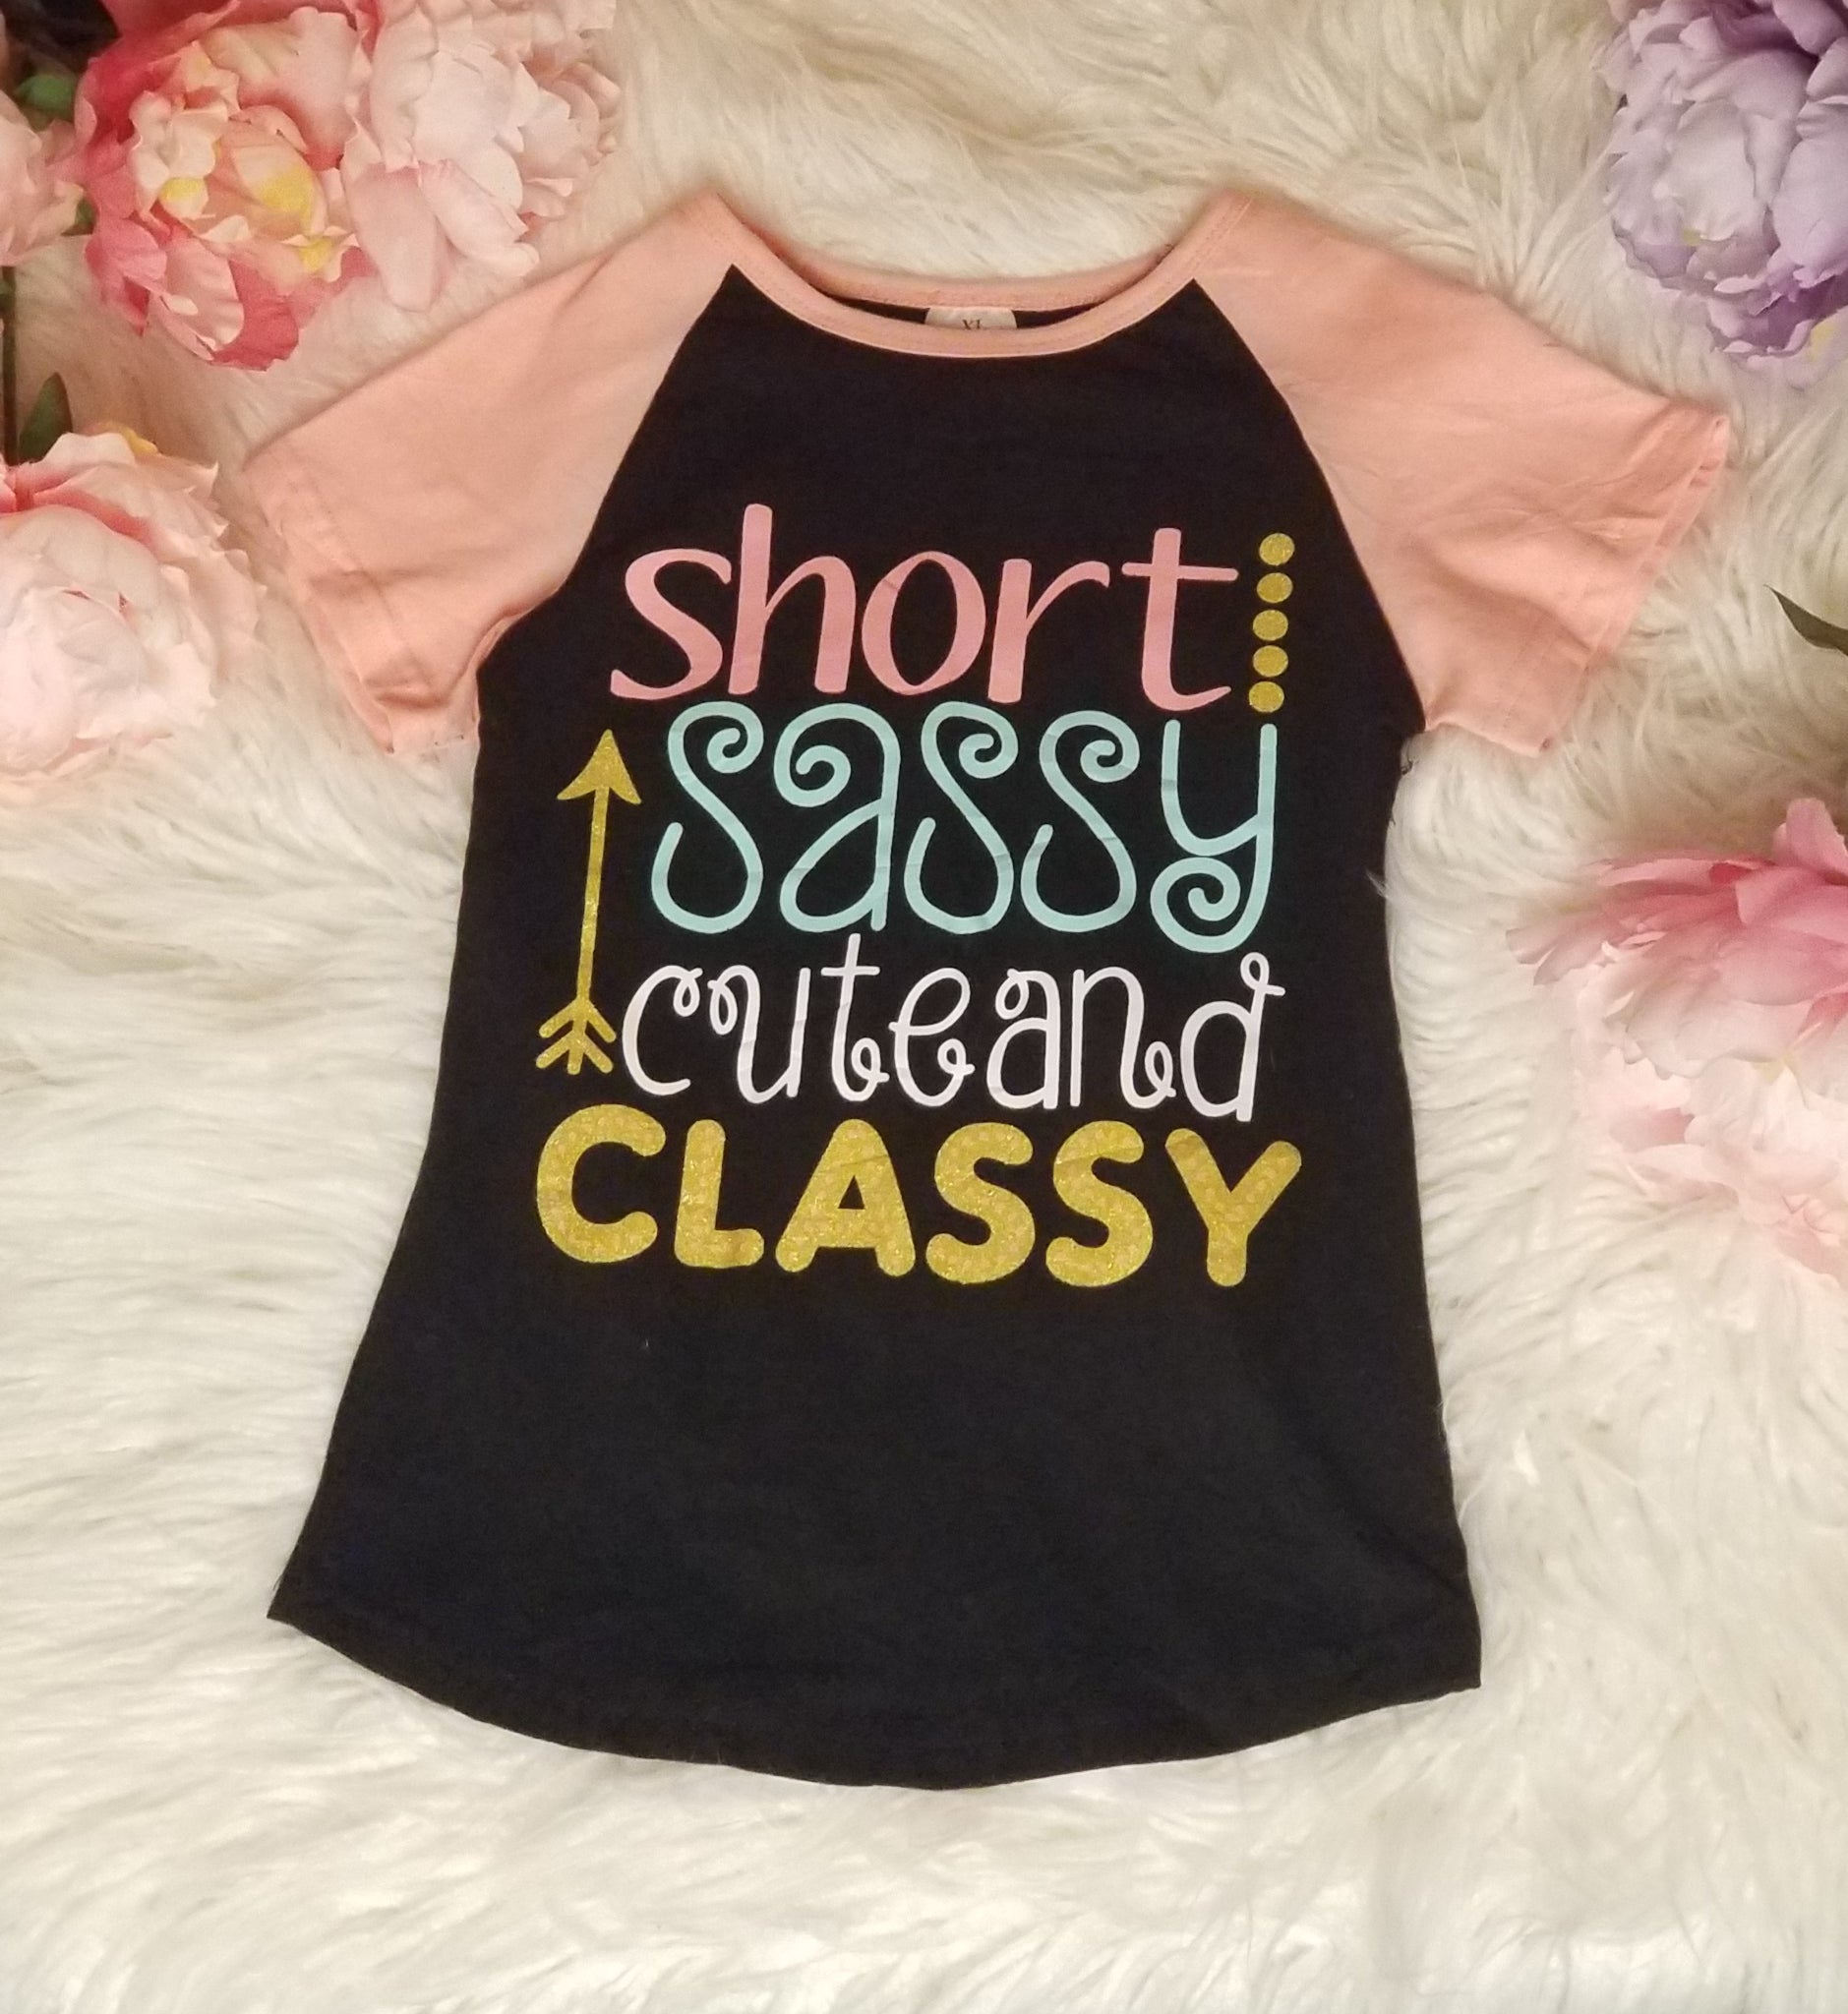 Short, sassy, cute, and classy